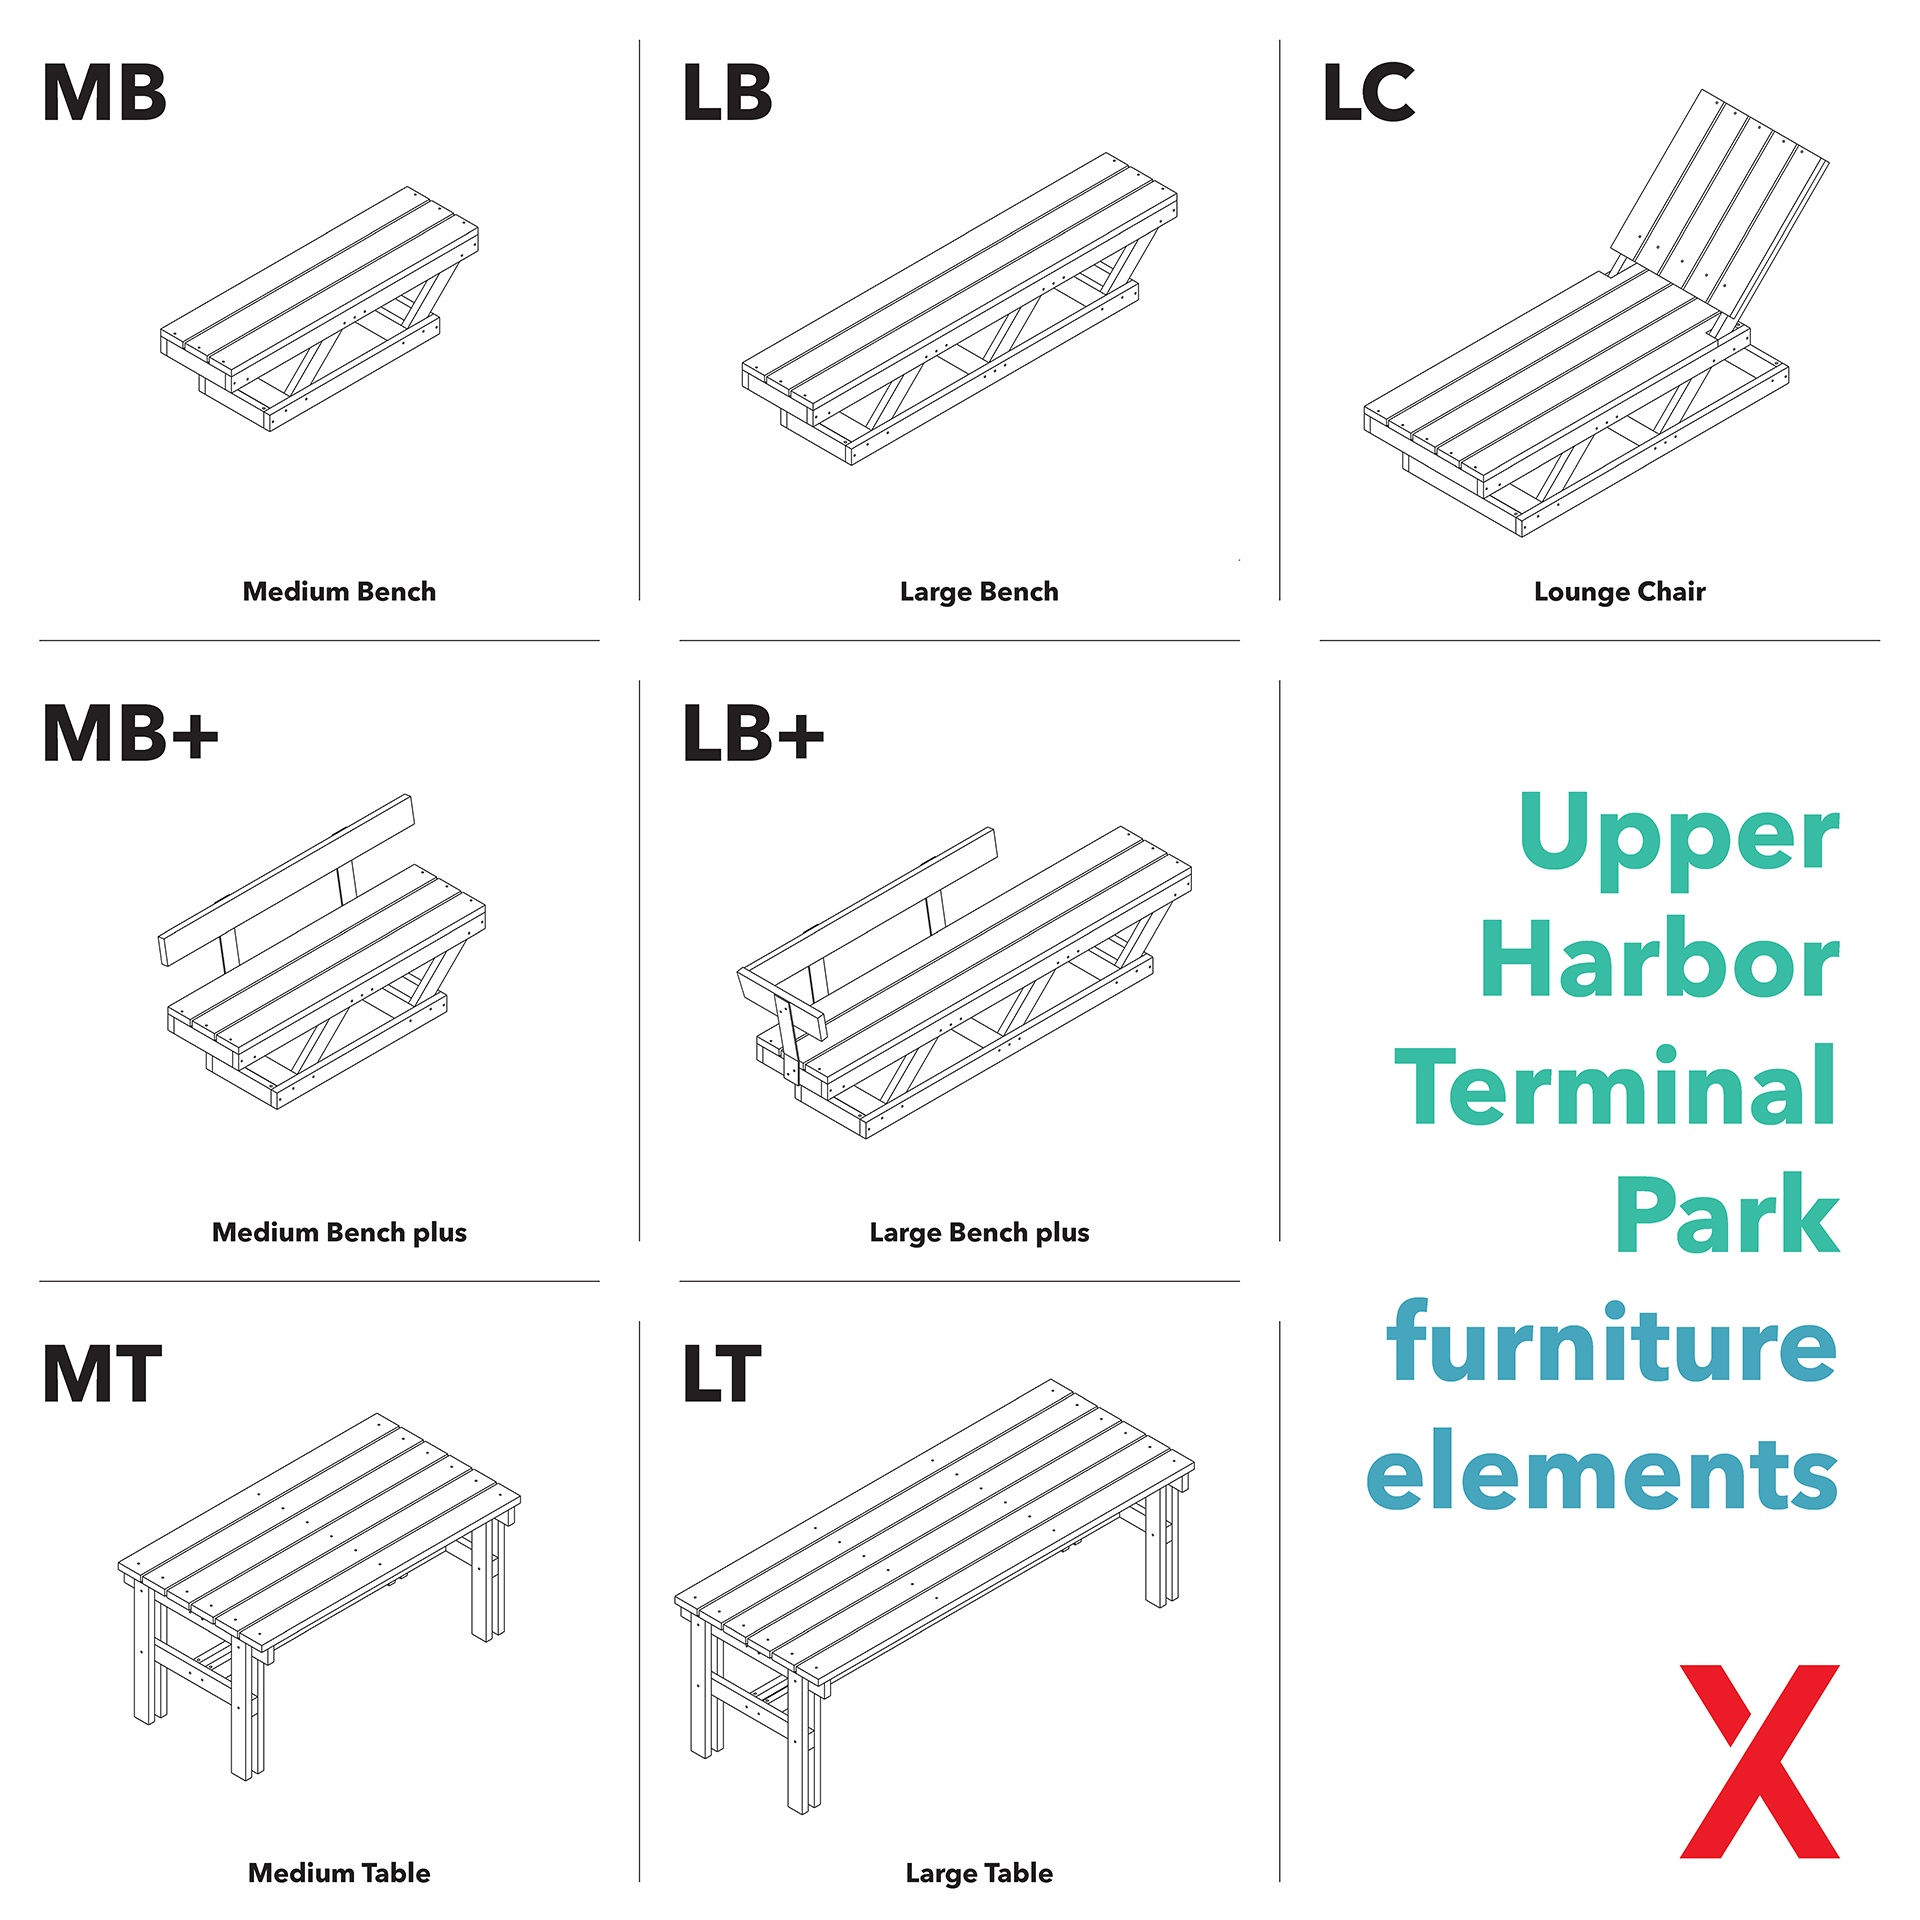 Design mockup of outdoor bench